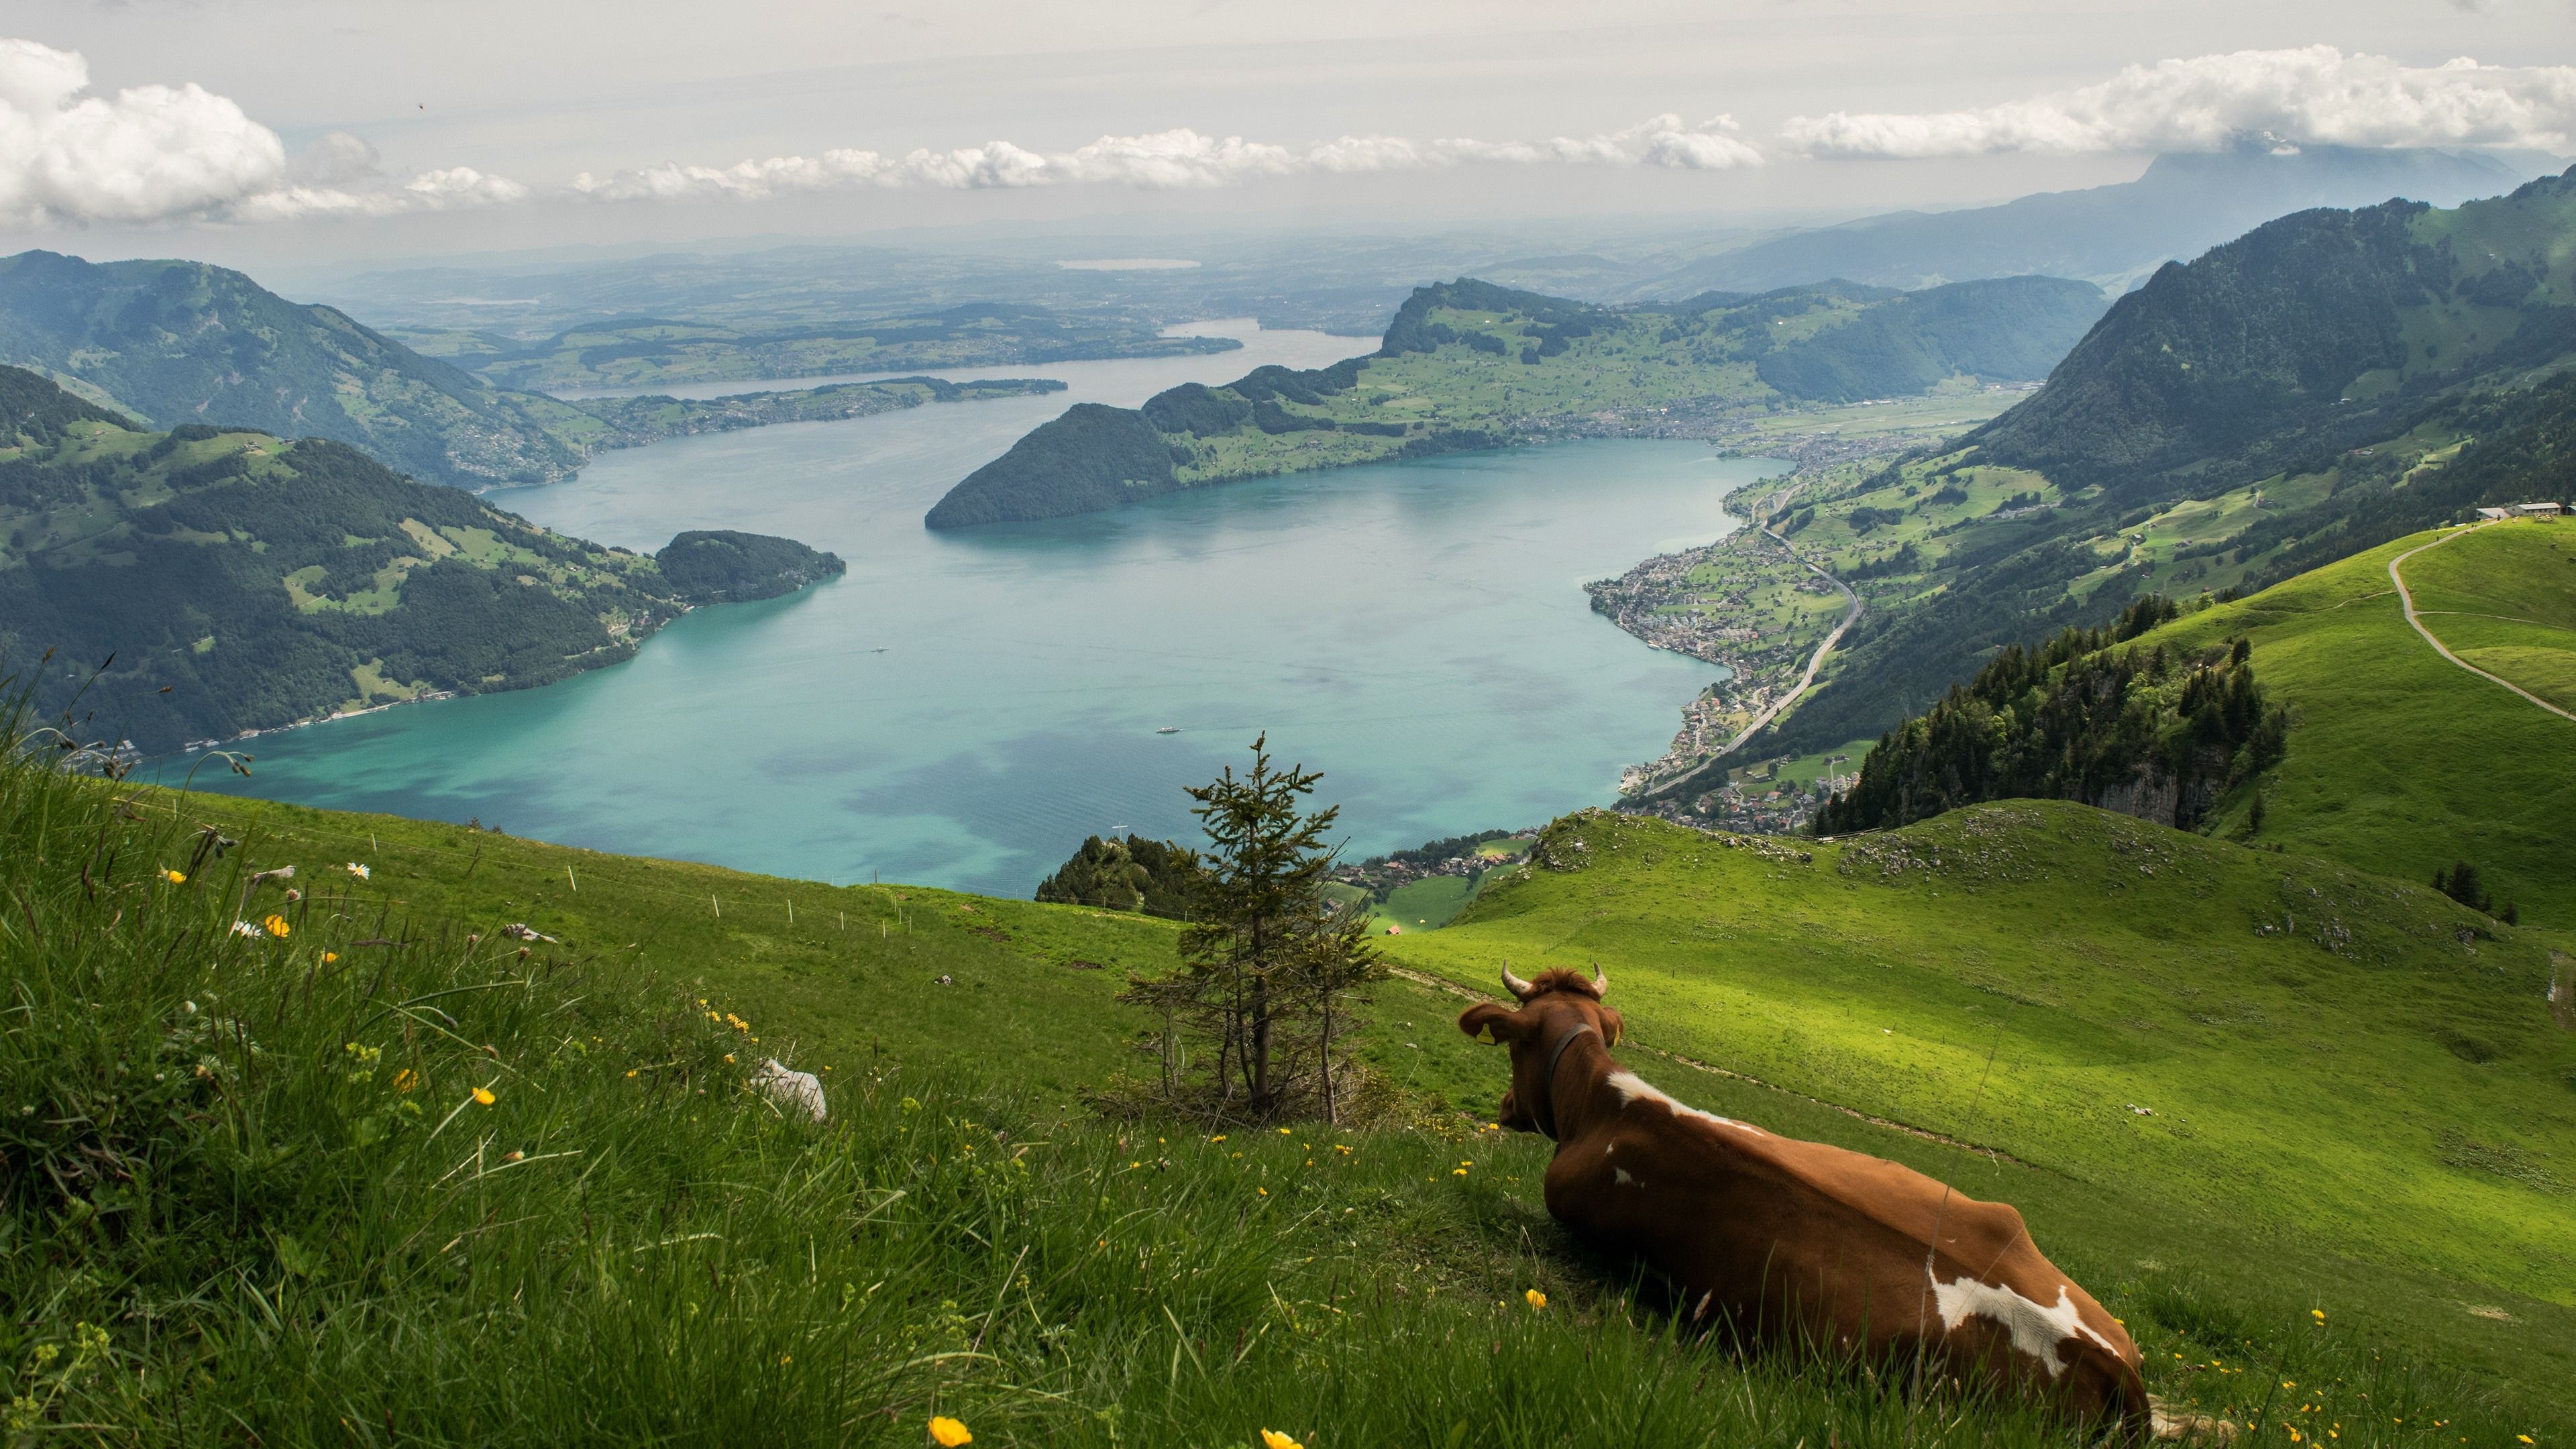  Schweiz Hintergrundbild 3840x2160. Schweiz, Fluss, Berge, Hang, Kuh 3840x2160 UHD 4K Hintergrundbilder, HD, Bild